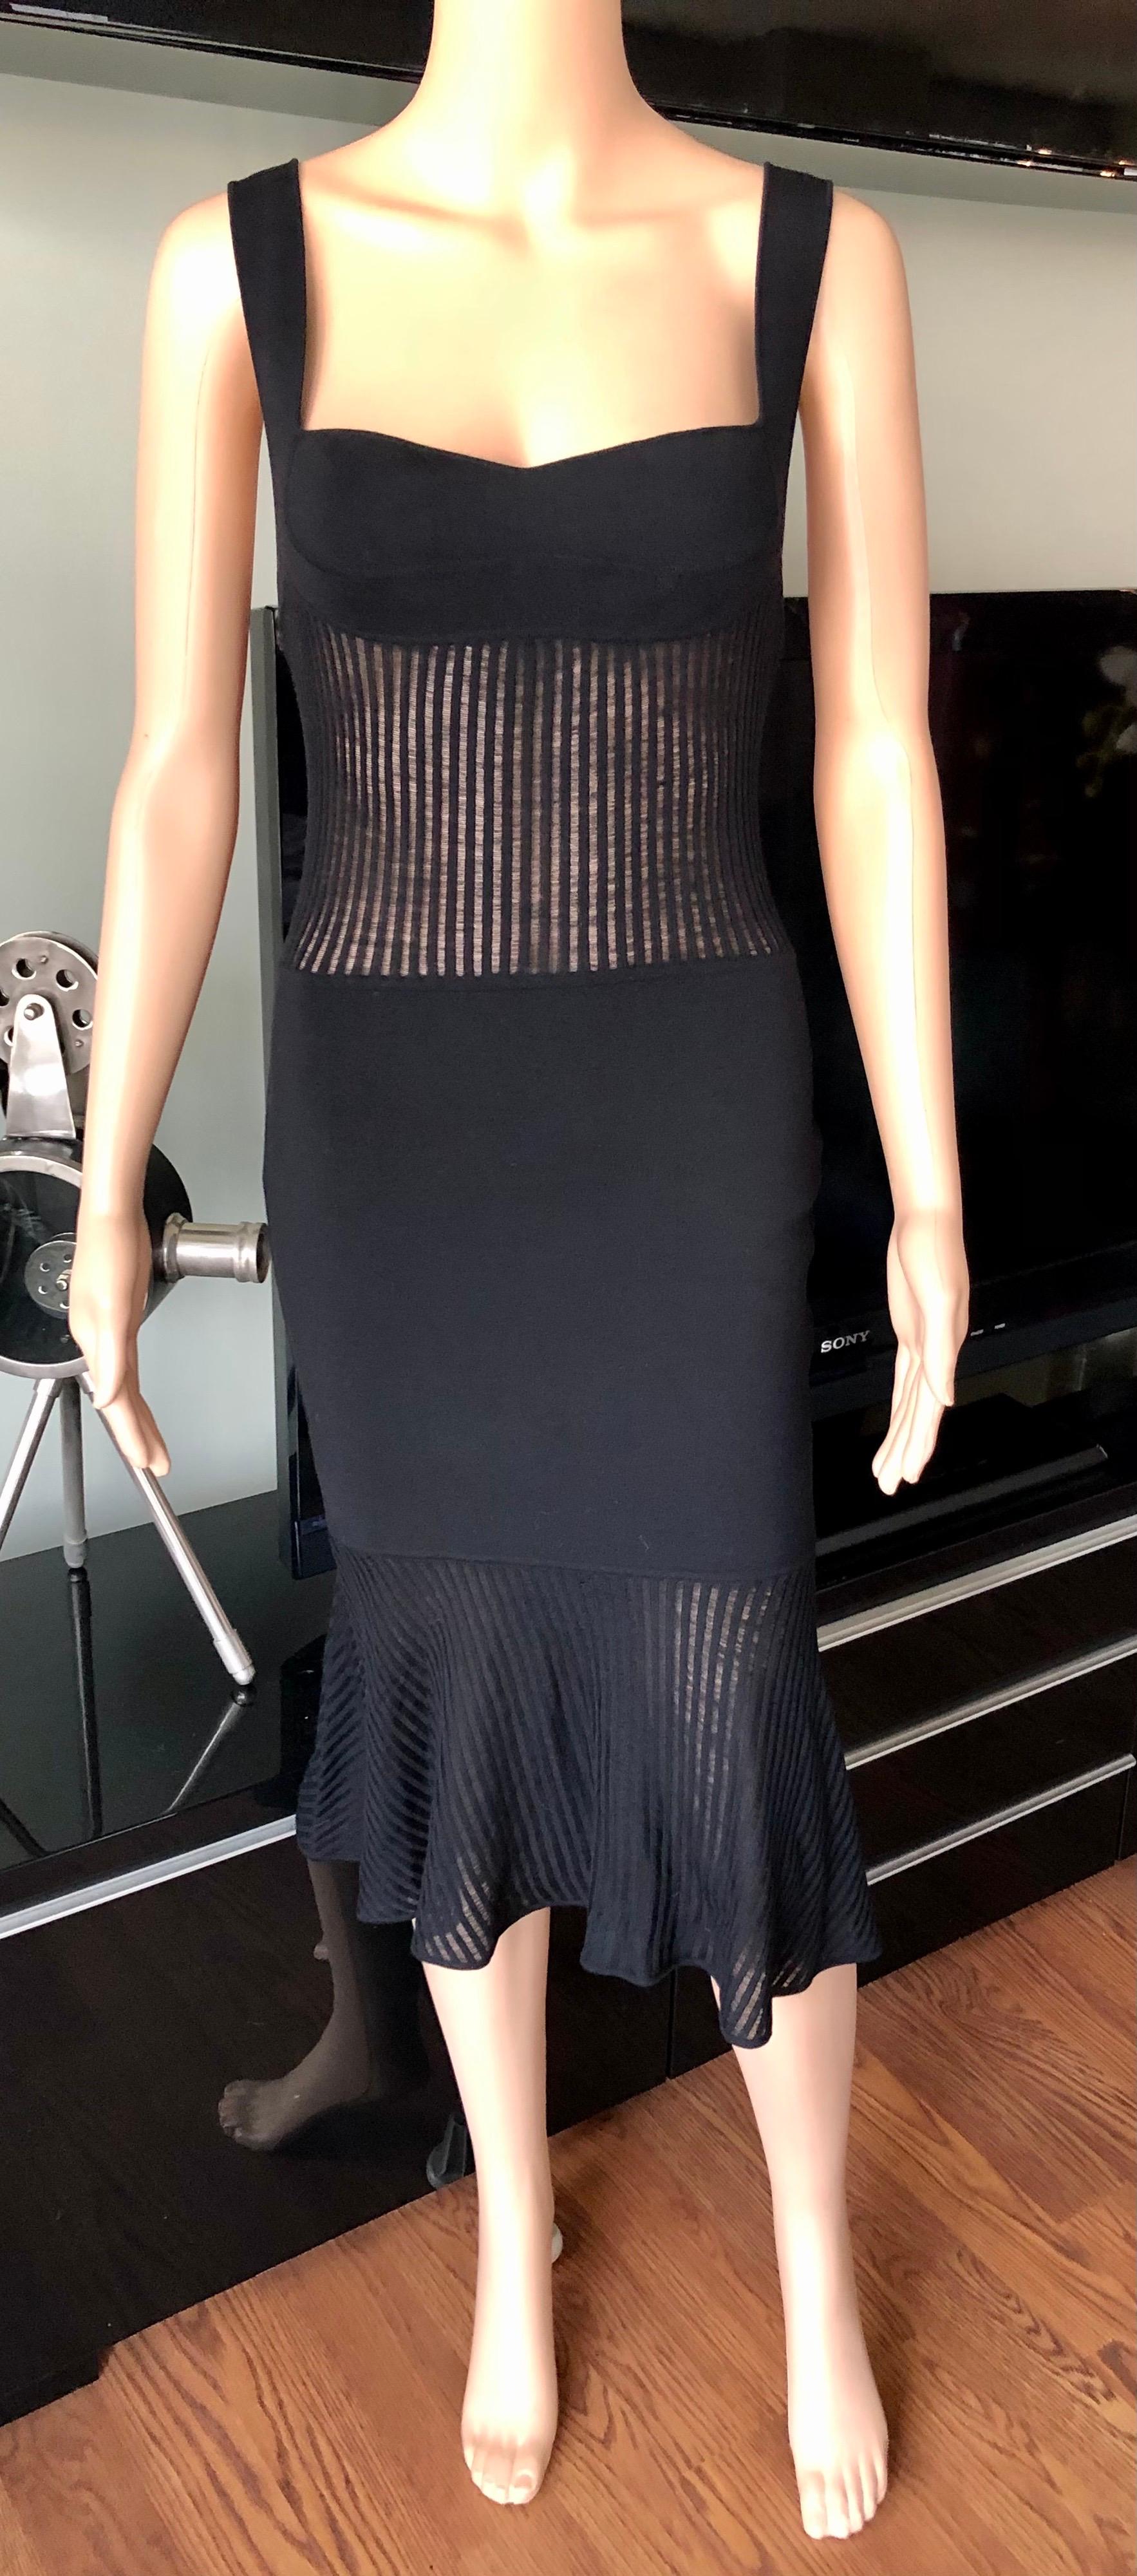 Gianni Versace 1990’s Vintage Sheer Knit Black Dress IT 38

Excellent Condition


